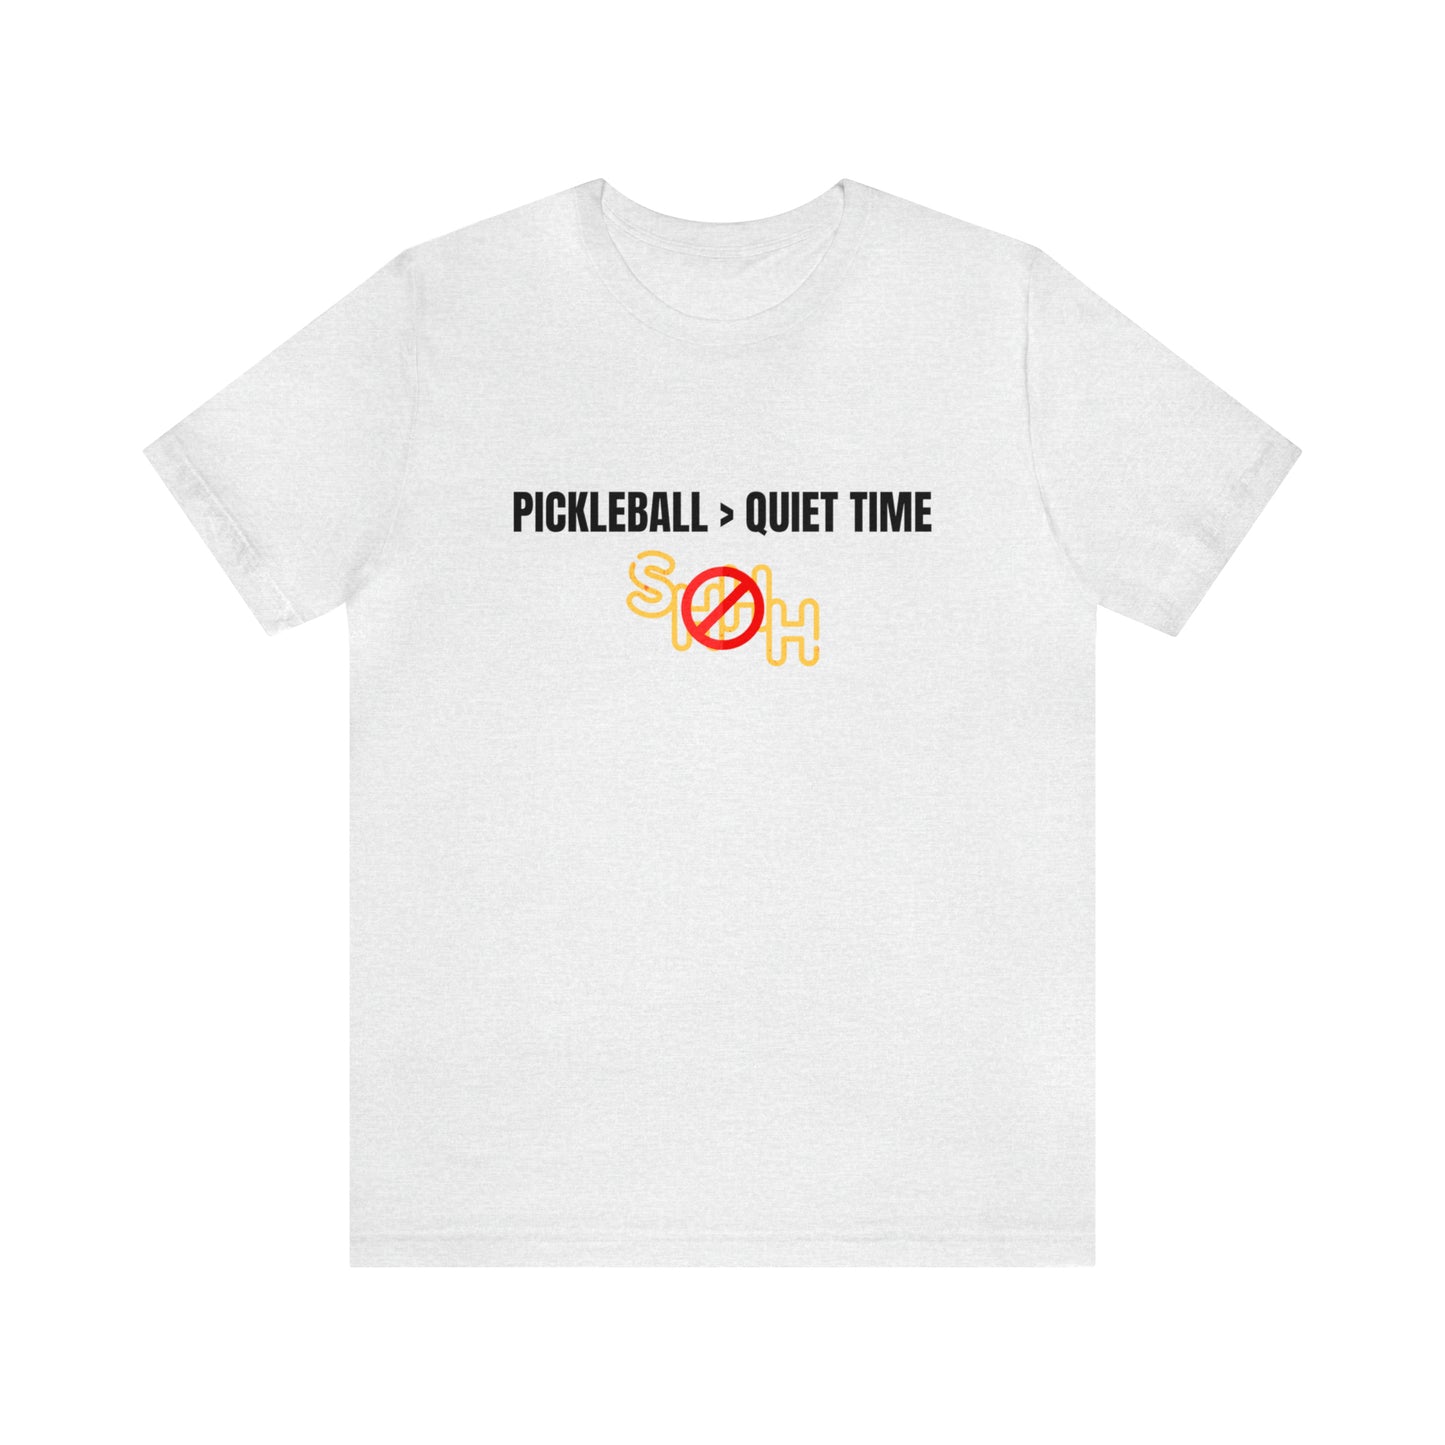 Pickleball > Quiet Time T-Shirt